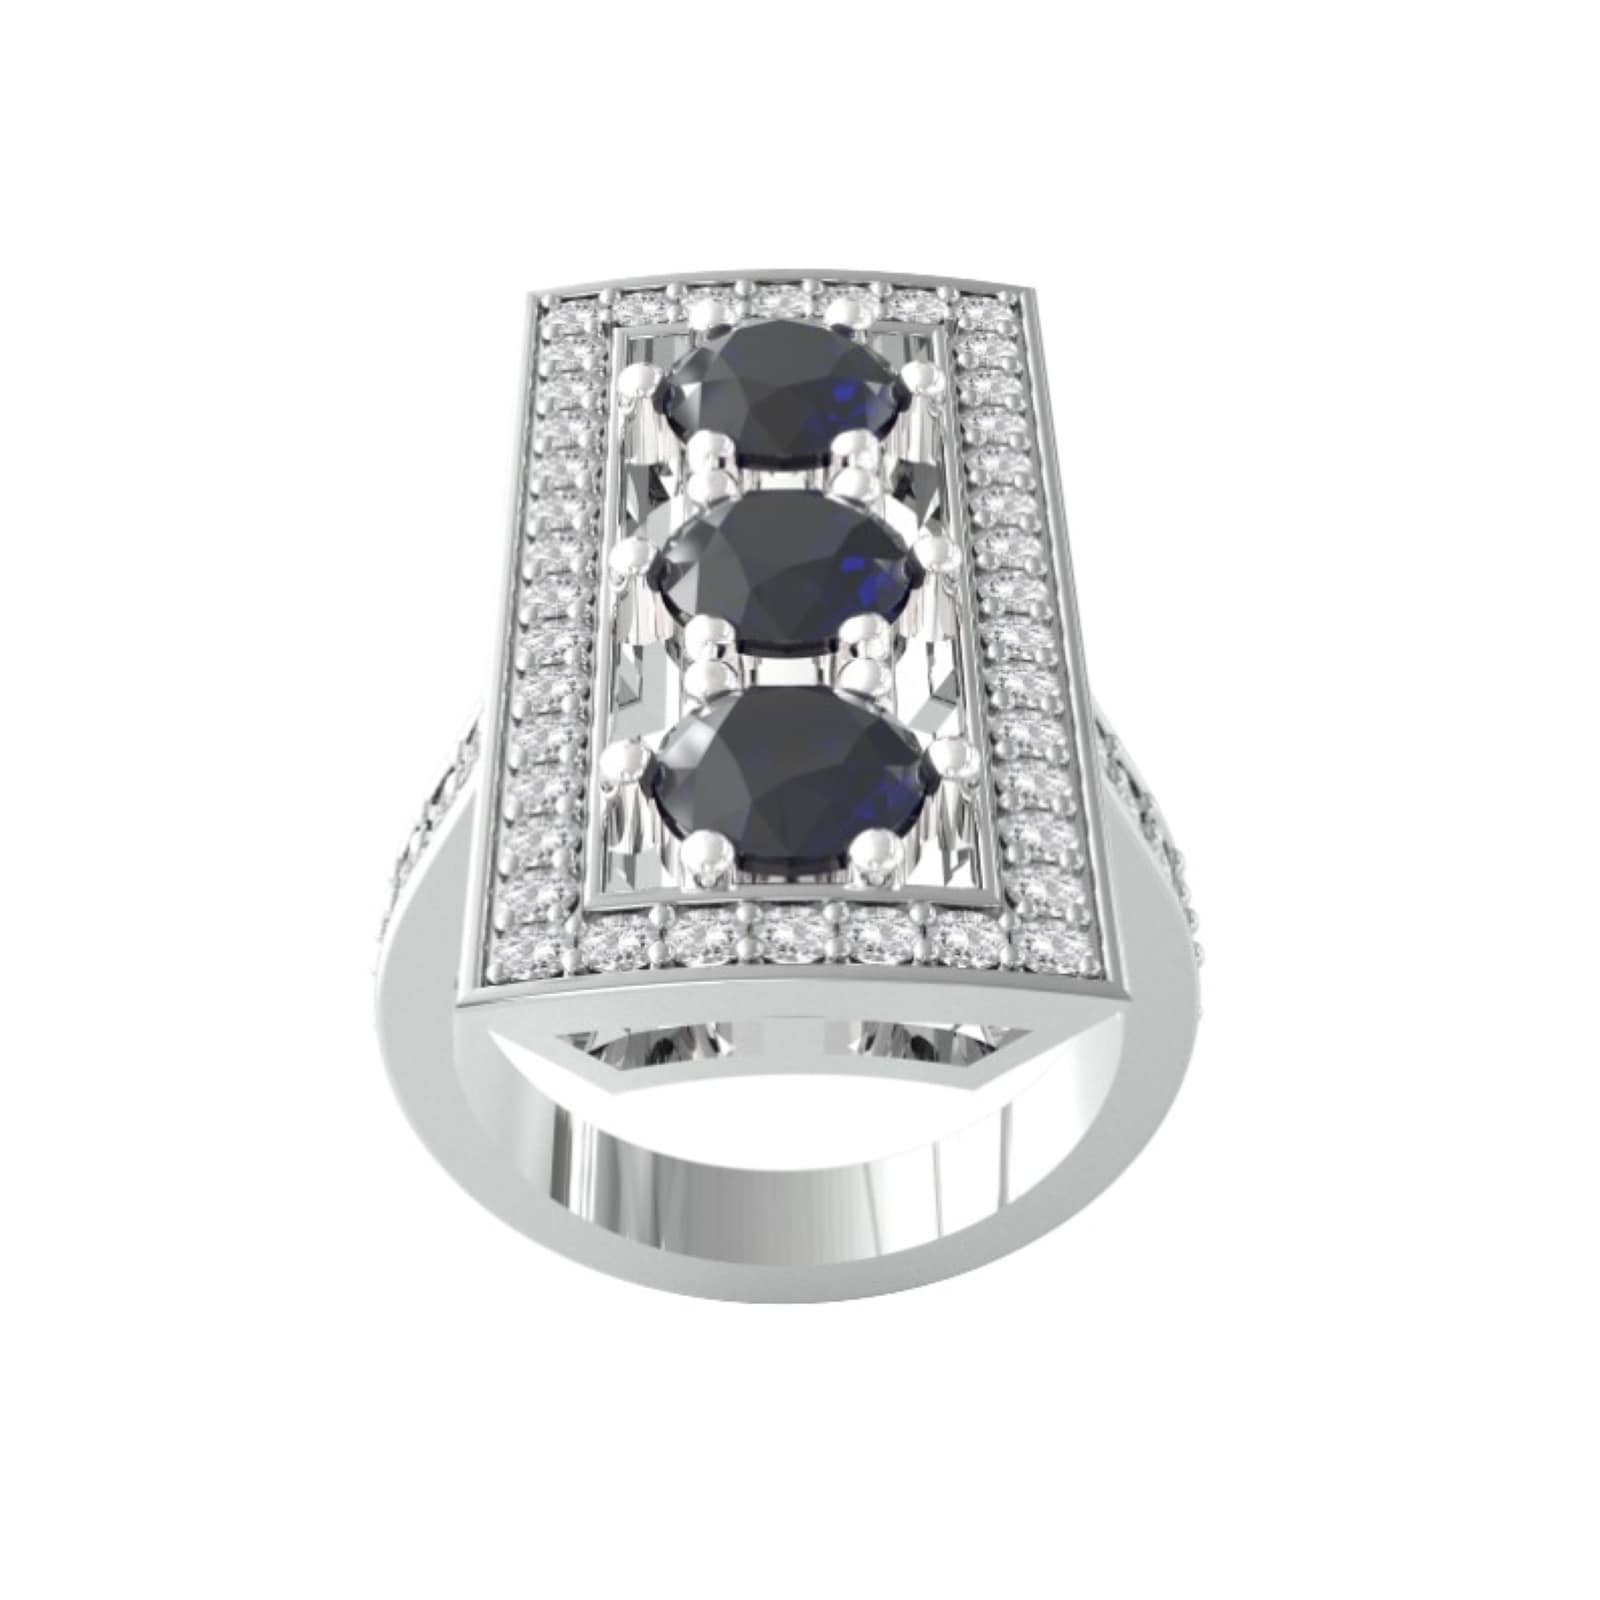 18ct White Gold Art Deco Sapphire & Diamond Plaque Ring - Ring Size D.5